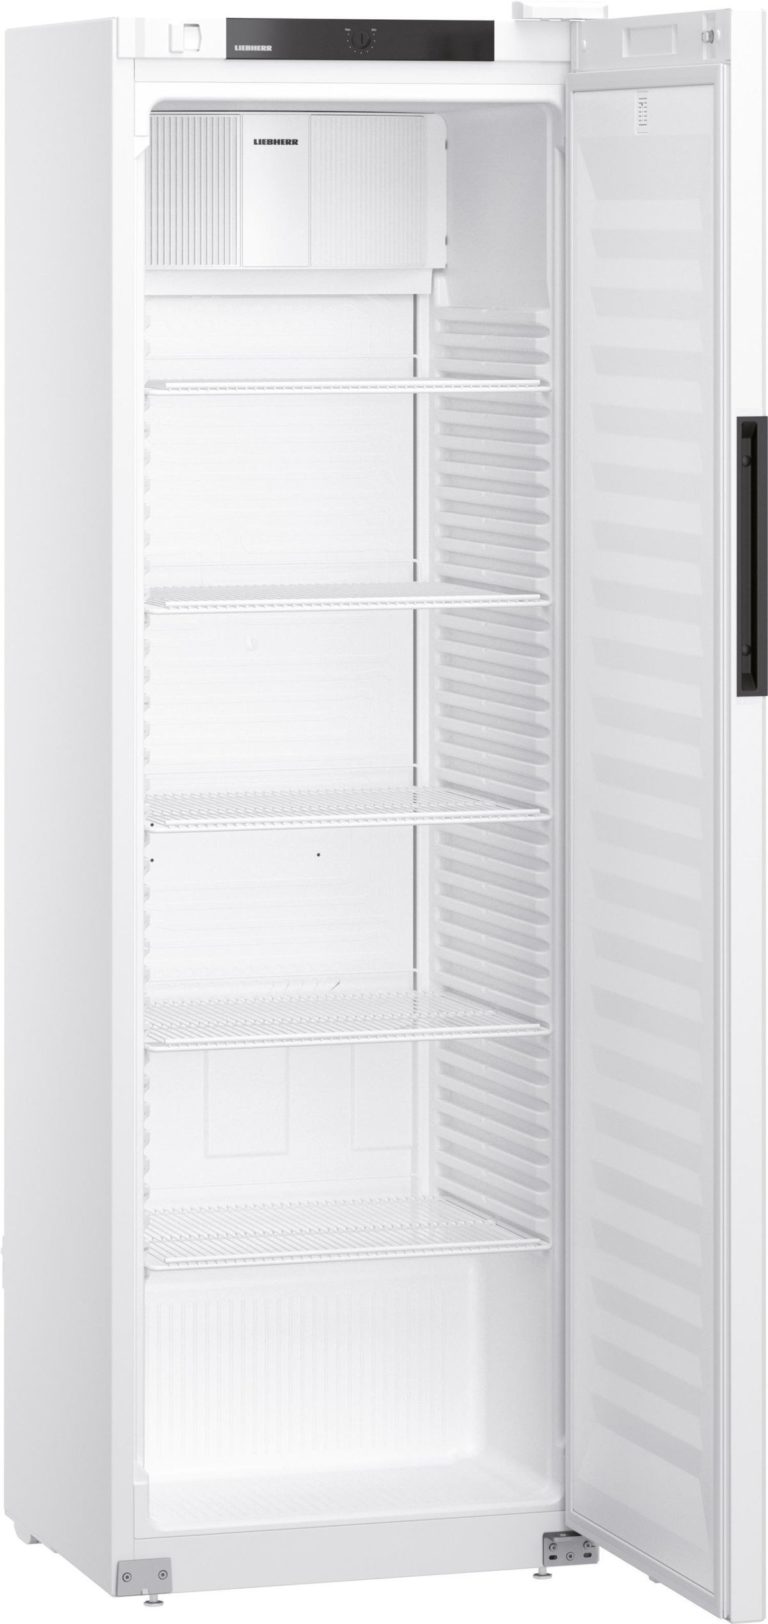 MRFVC-4001-20 LIEBHERR Kühlschrank mit Ventilator